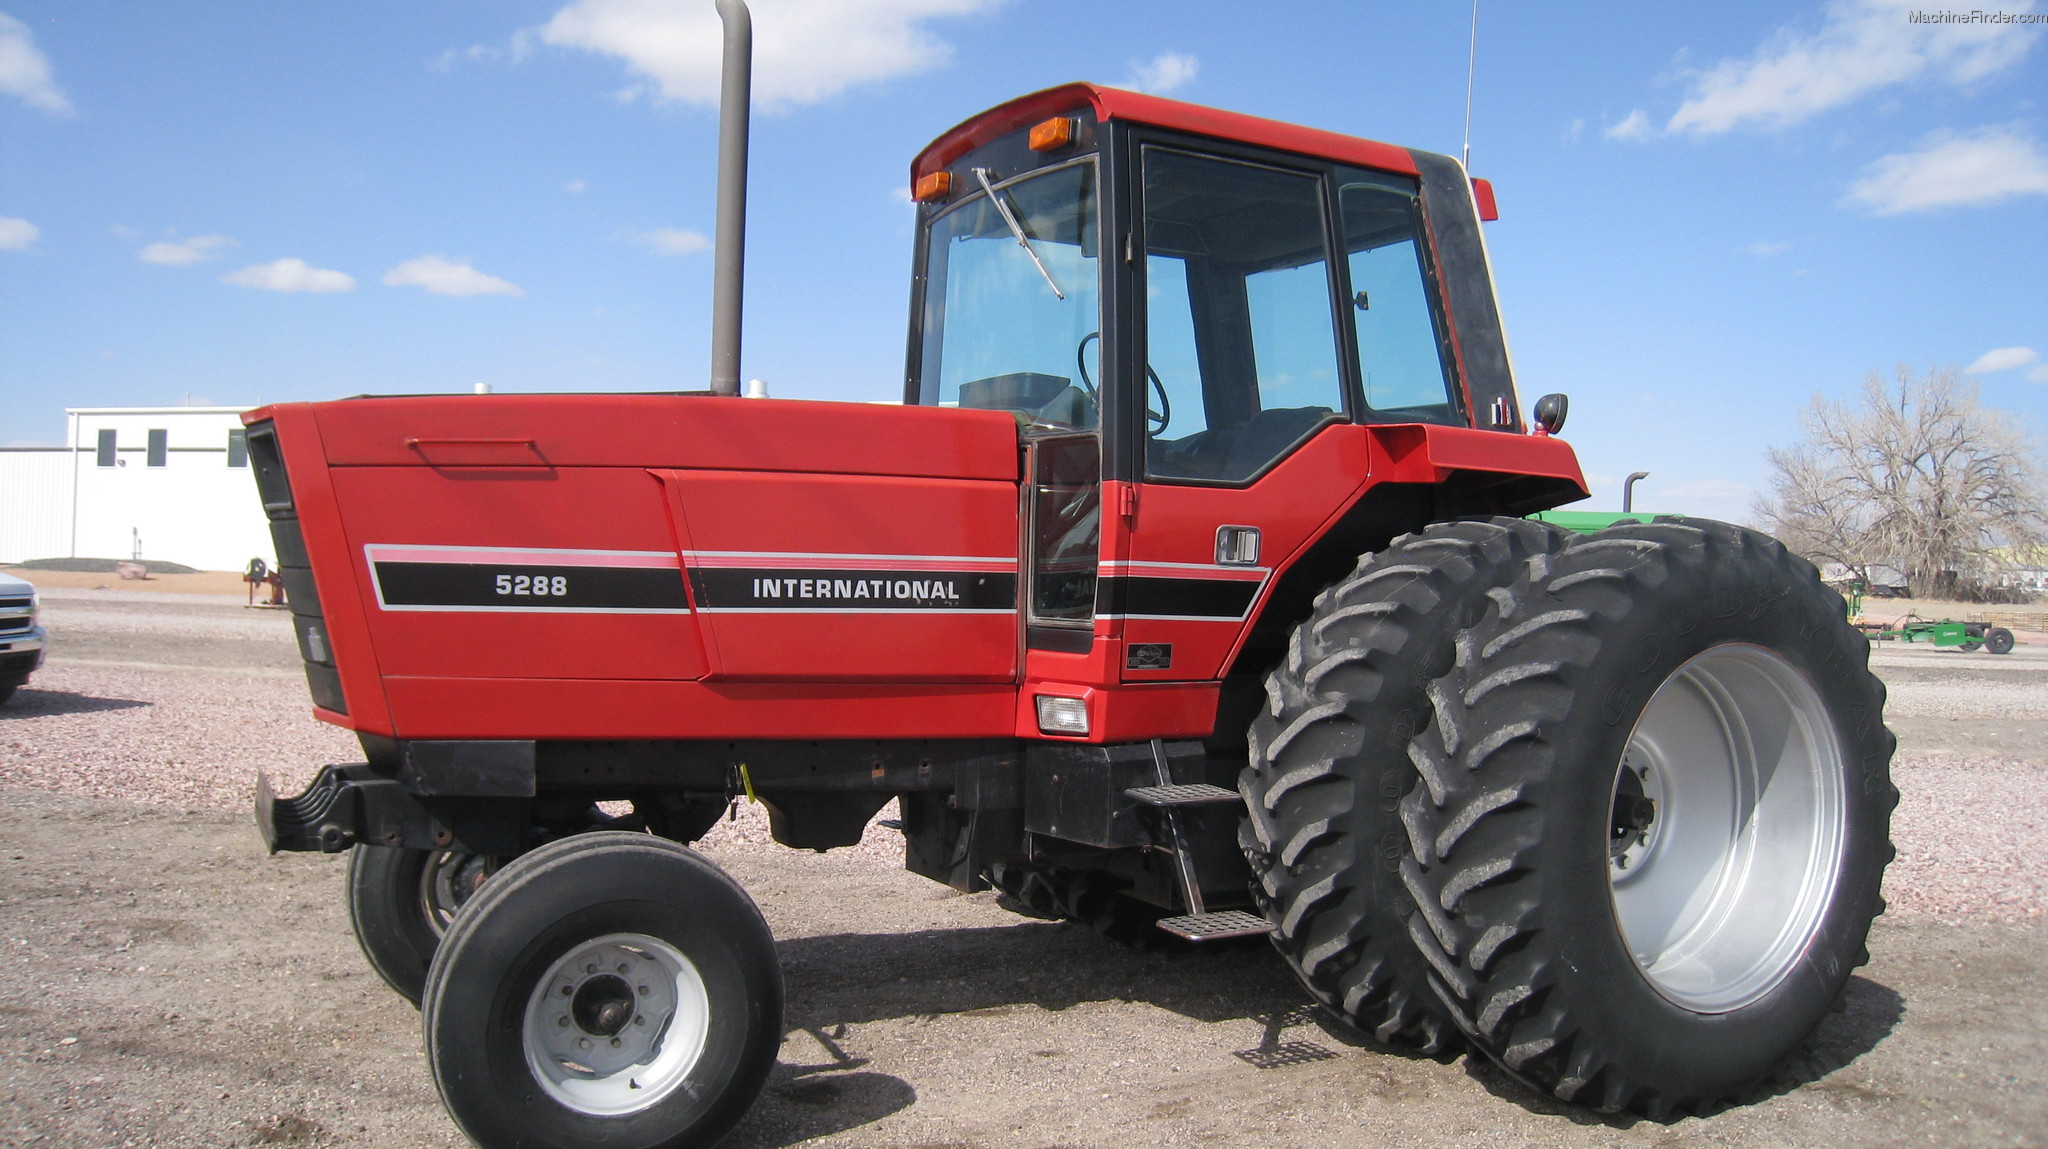 1981 International Harvester 5288 Tractors - Row Crop (+100hp) - John ...